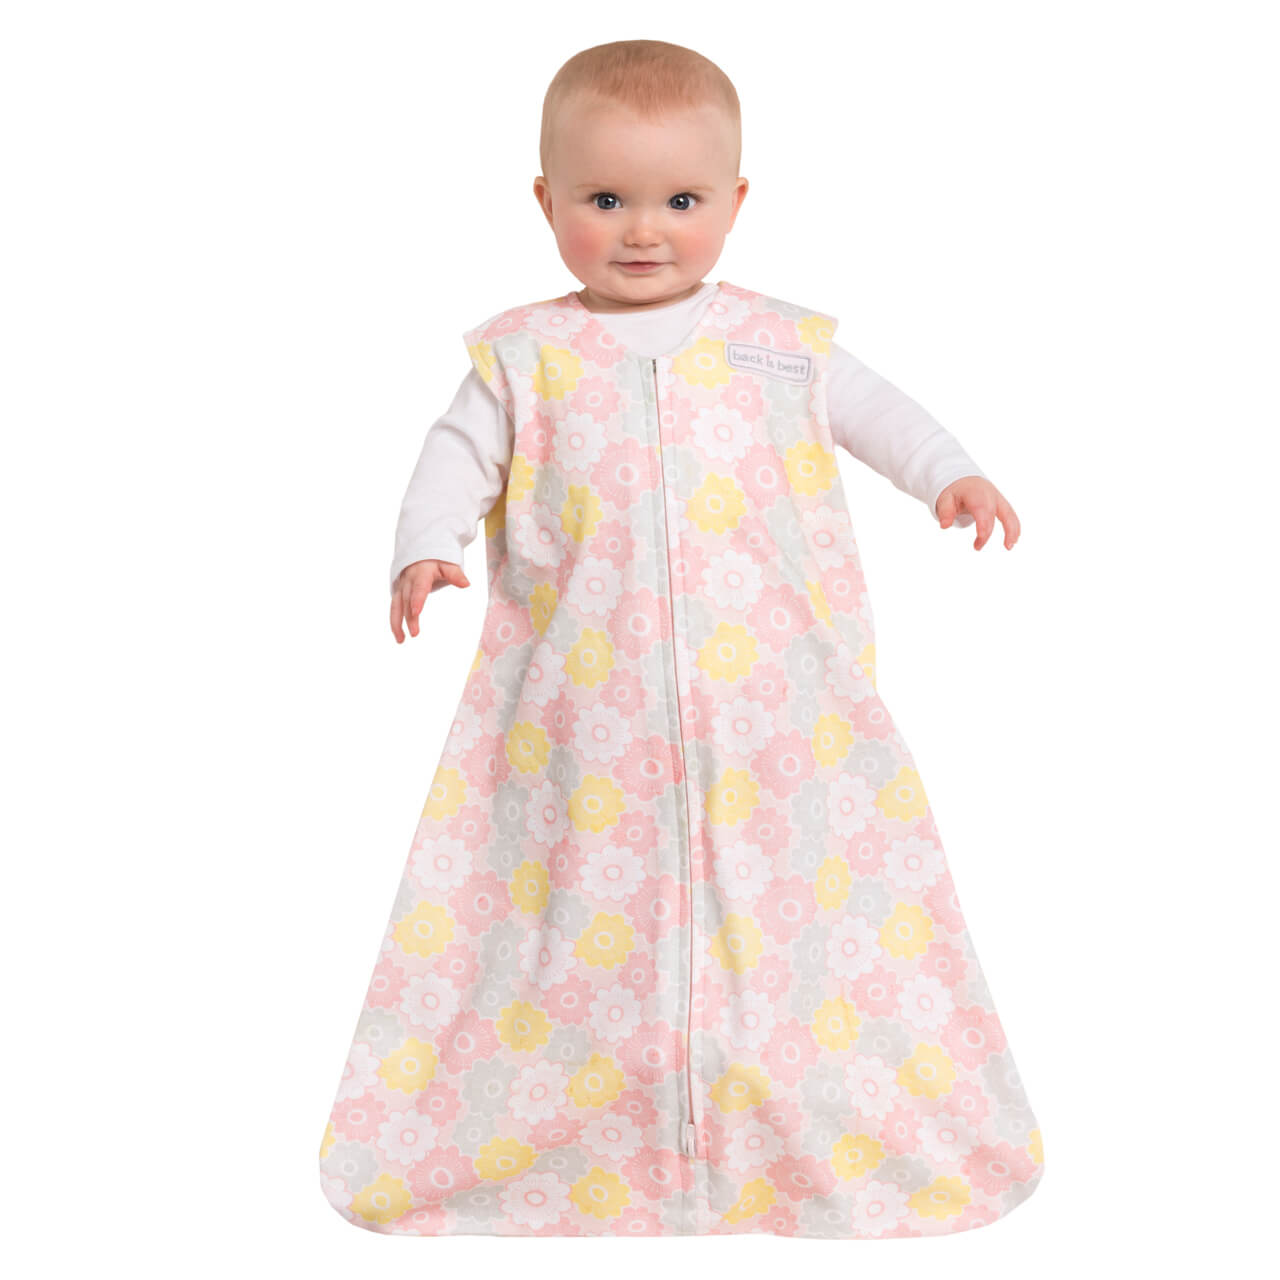 Halo Sleepsack Wearable Blanket – Gray Pink Flowers – Tickled Babies